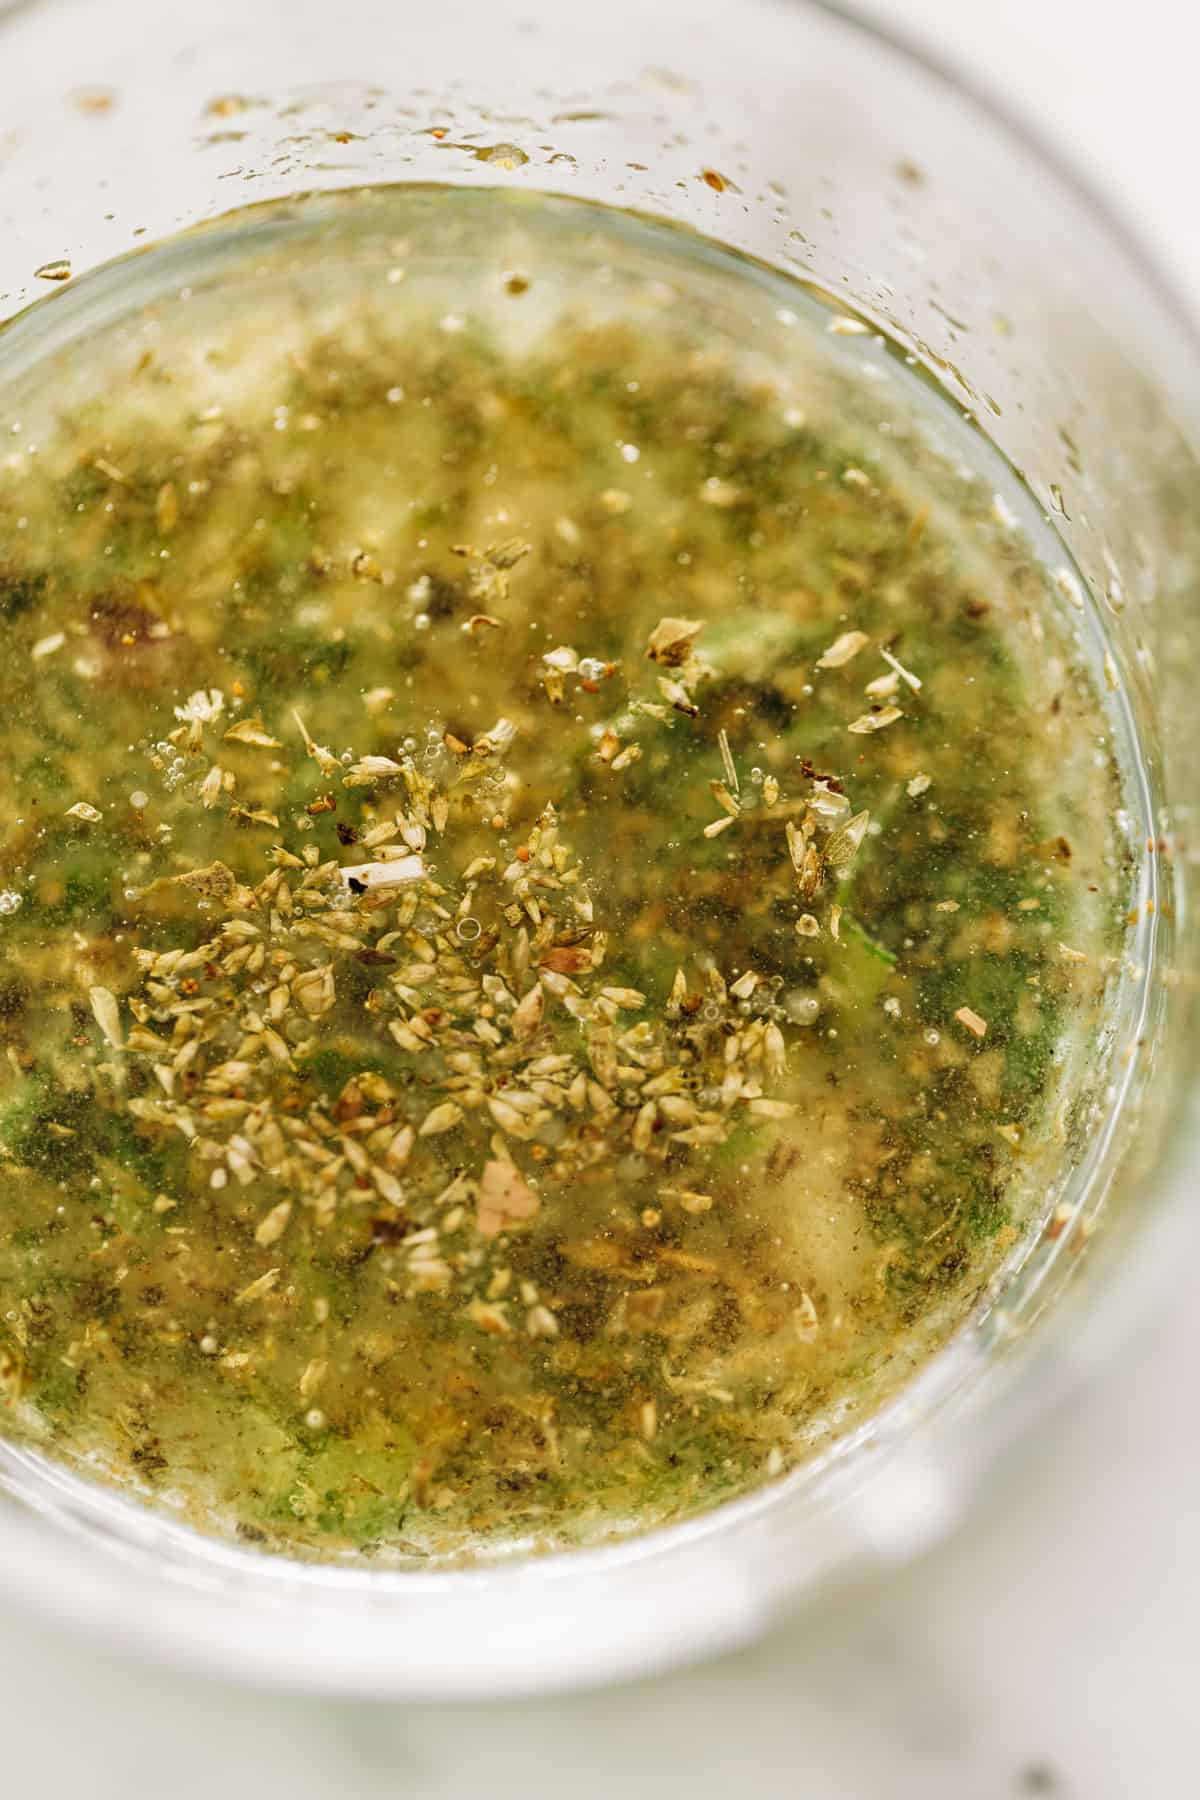 Lemon herb salad dressing in a glass for a Chickpea Tomato Salad | cafedelites